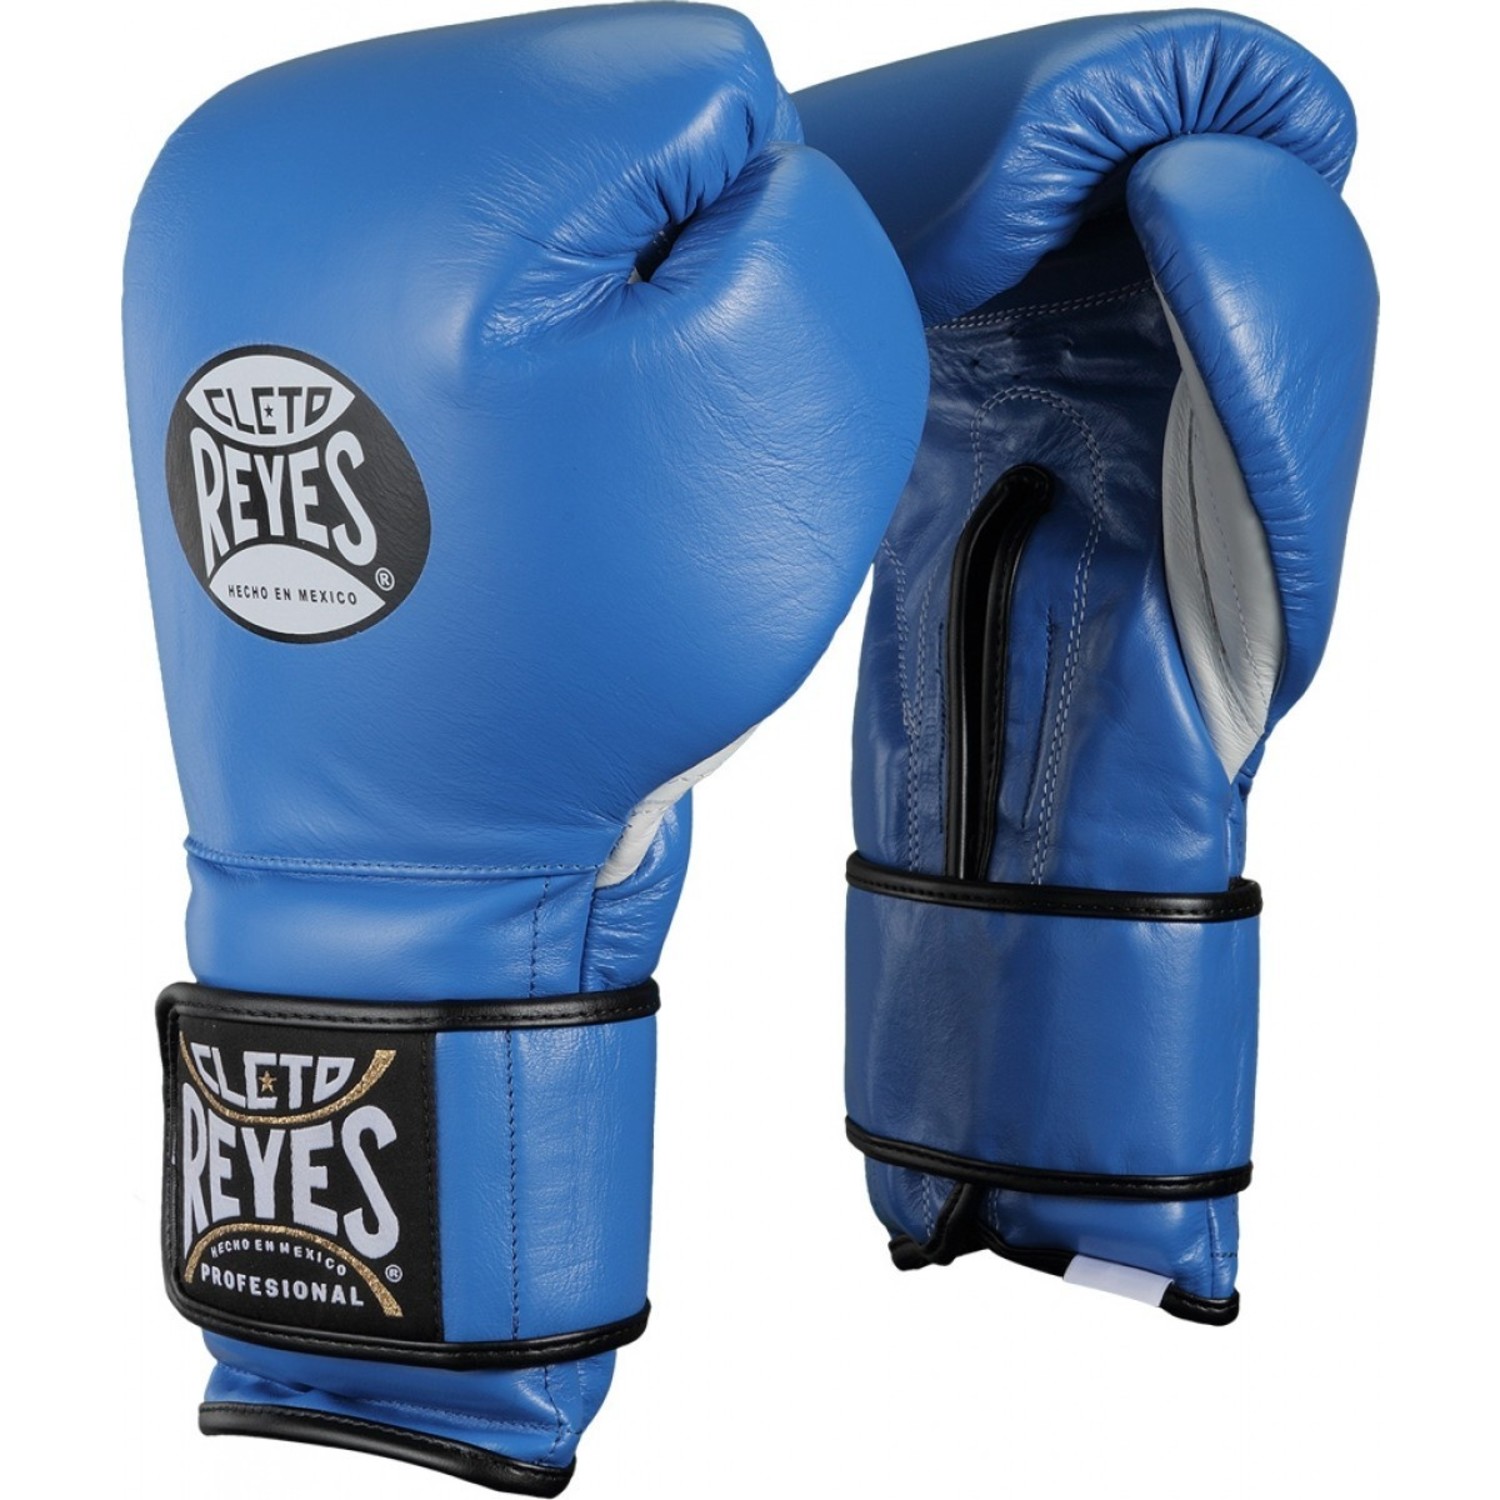 Cleto Reyes Super Bag Gloves Extra Padding